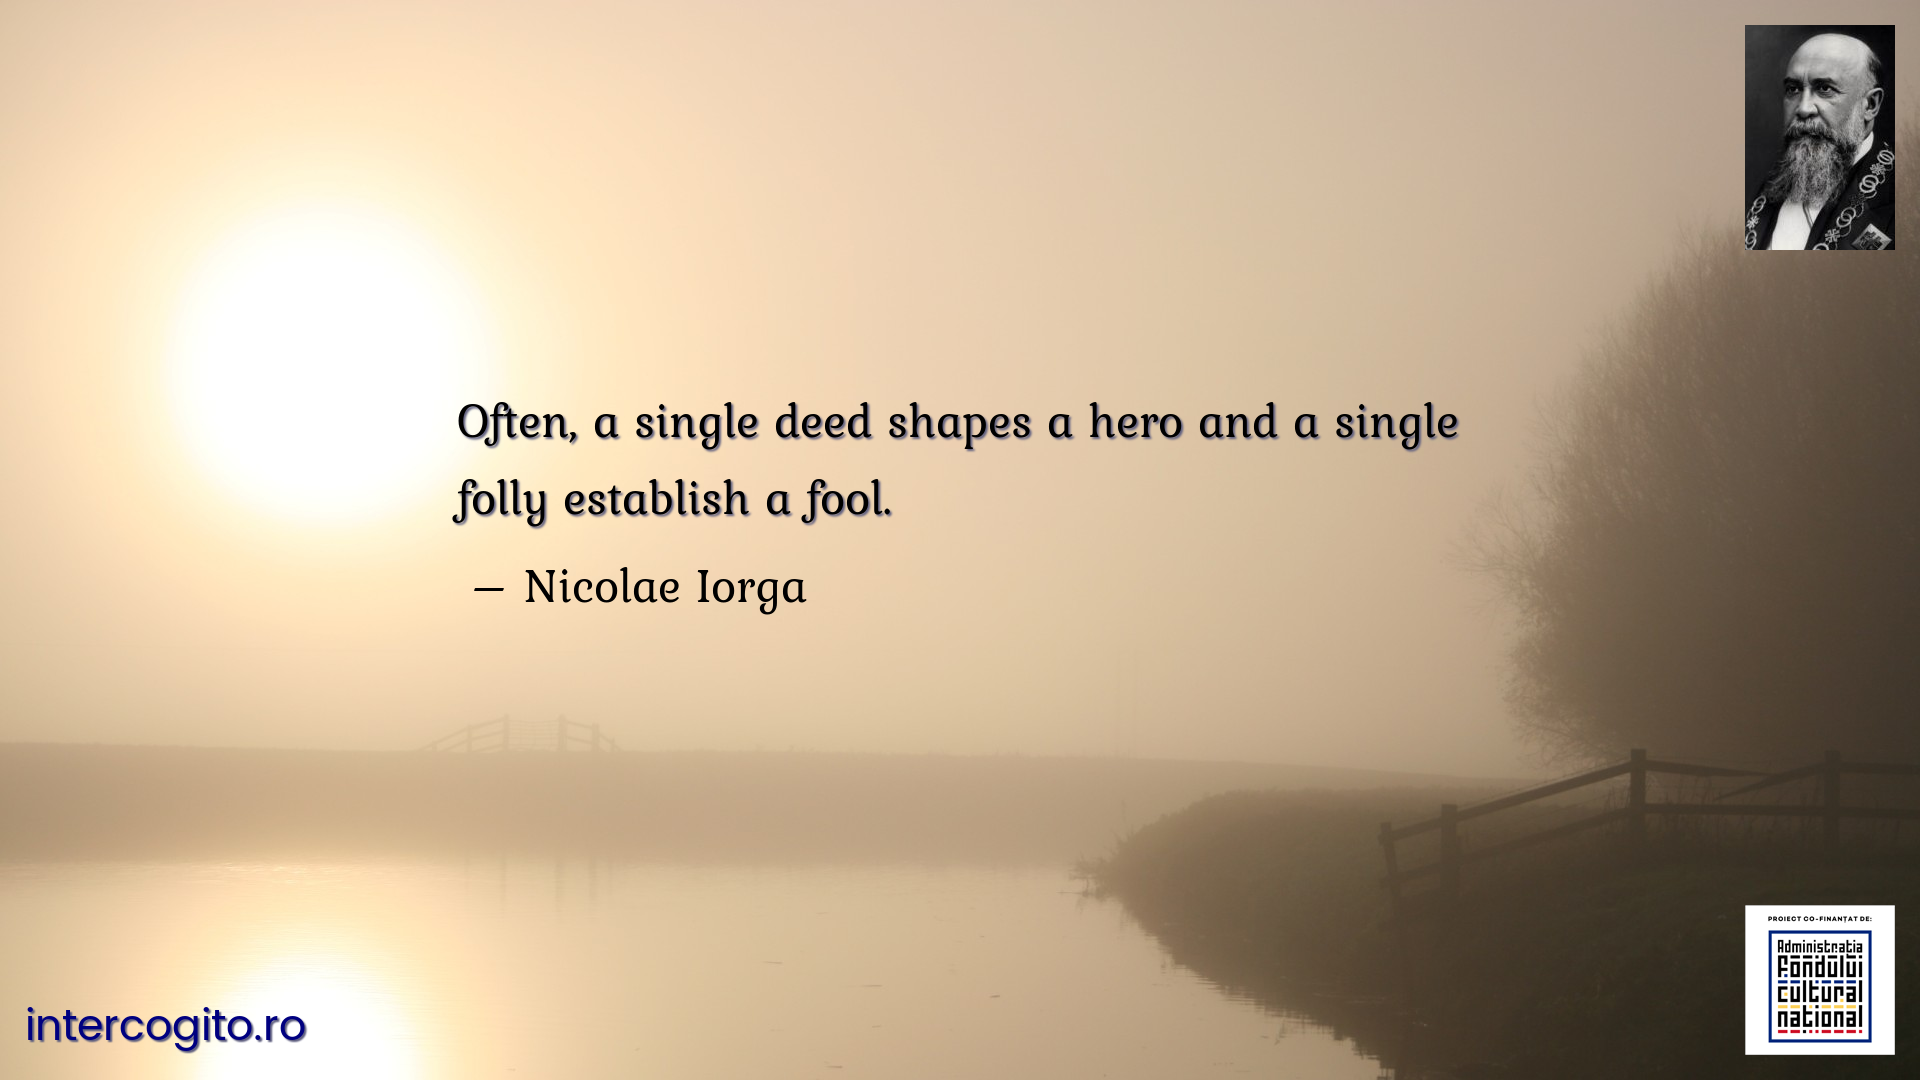 Often, a single deed shapes a hero and a single folly establish a fool.